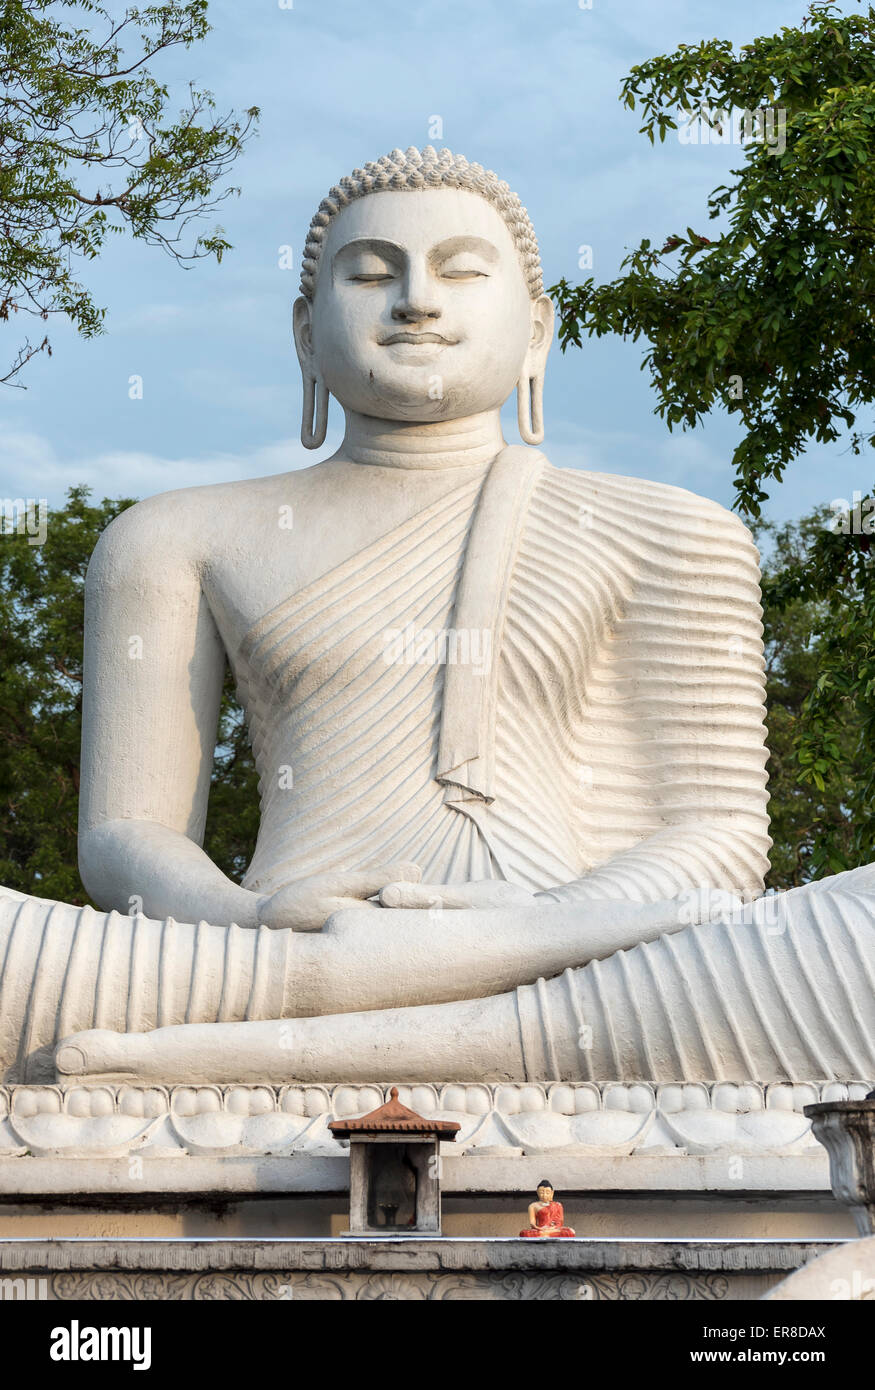 Statue de Bouddha, Polonnaruwa, Sri Lanka Banque D'Images